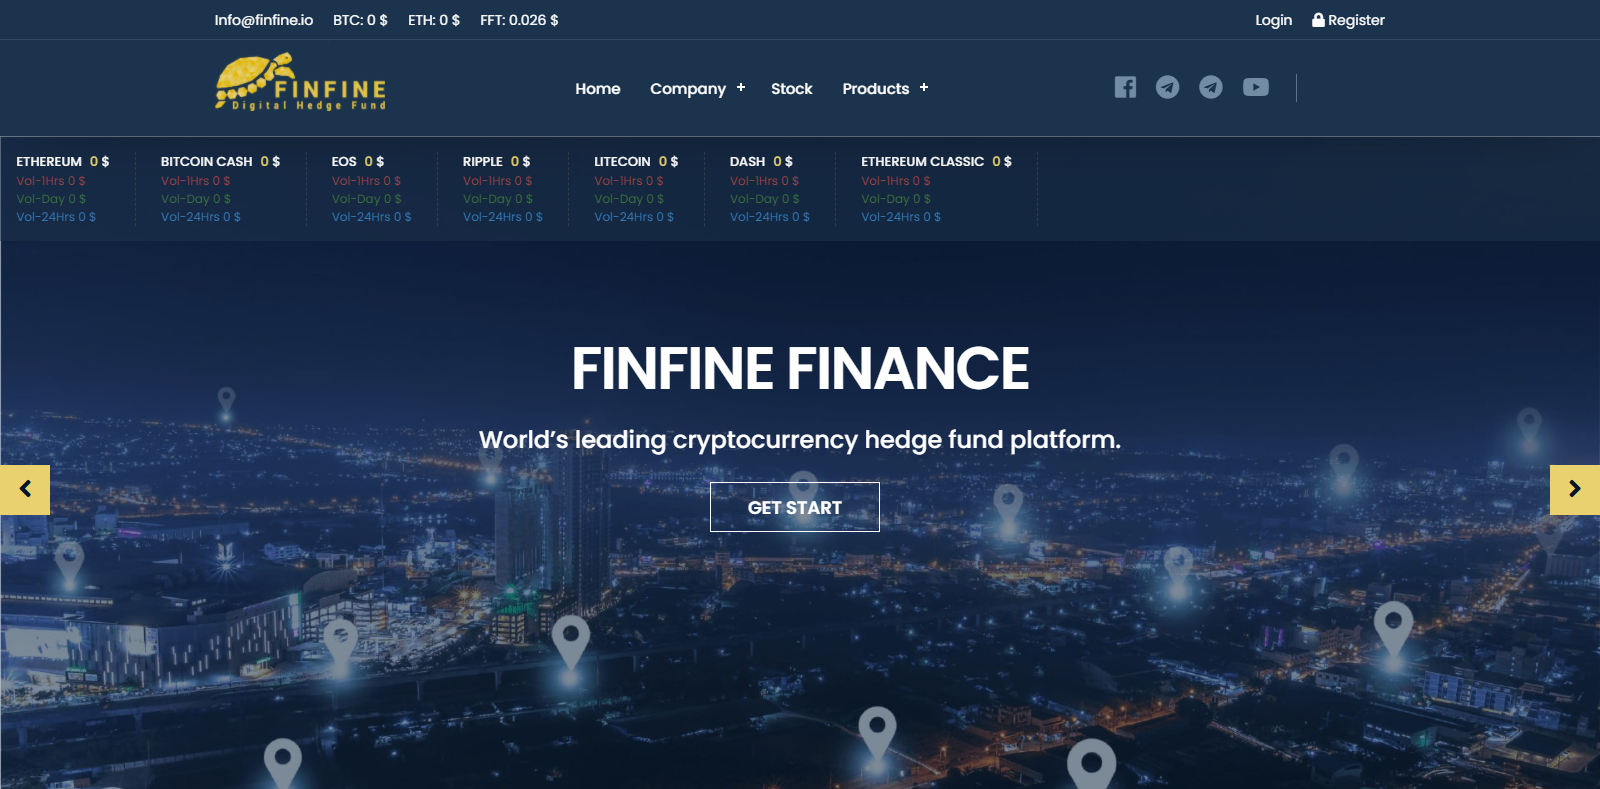 Finfine Homepage Image